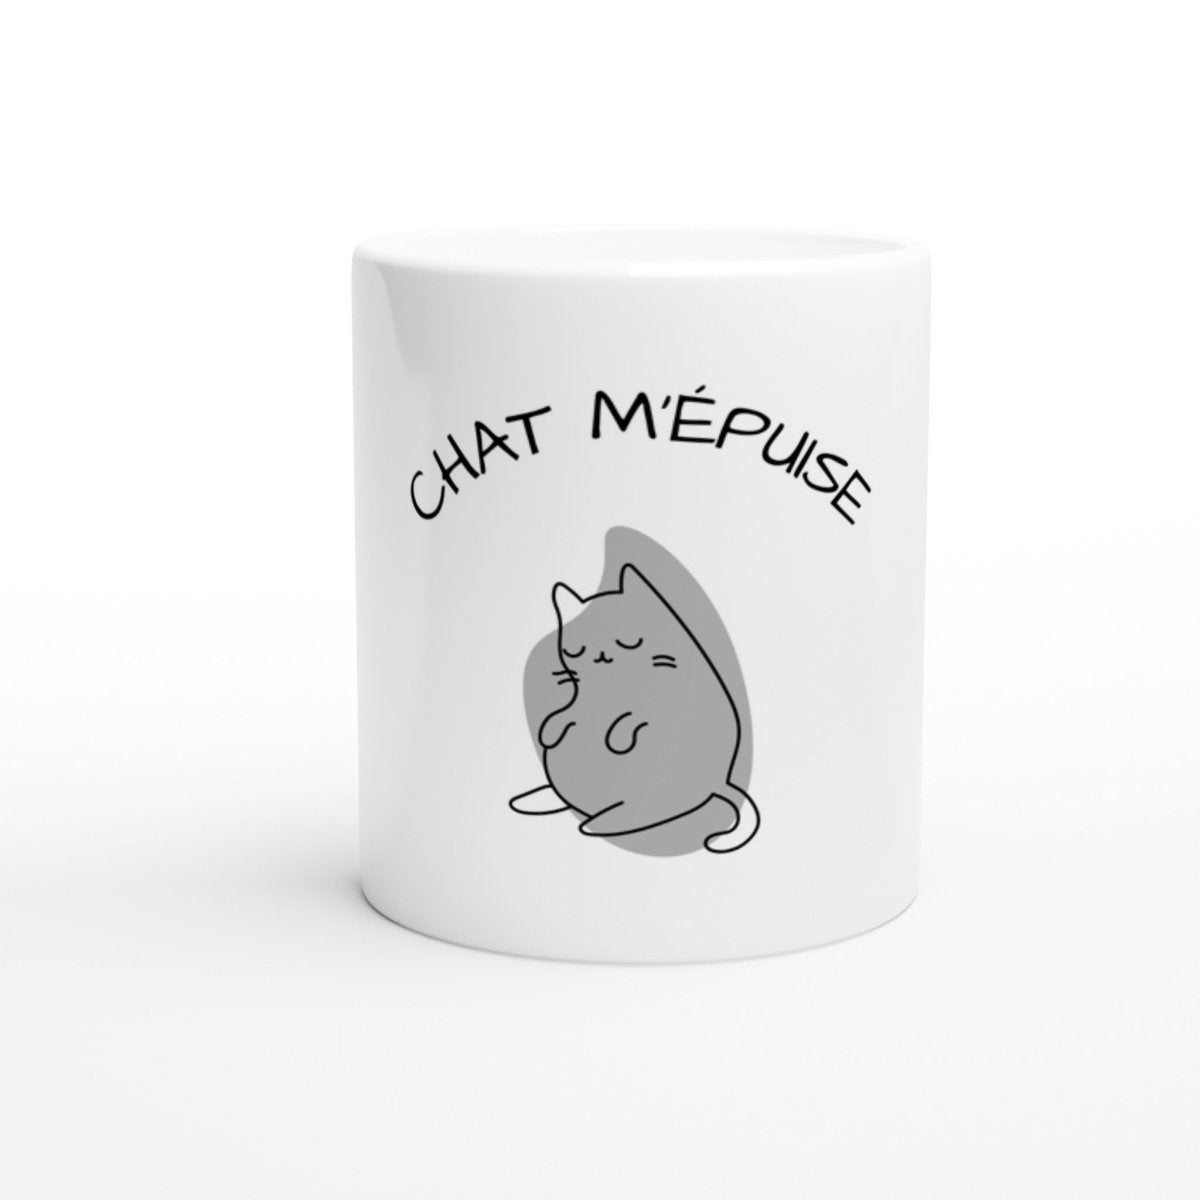 Mug "Chat m'épuise" - Mister Shirt - Print Material